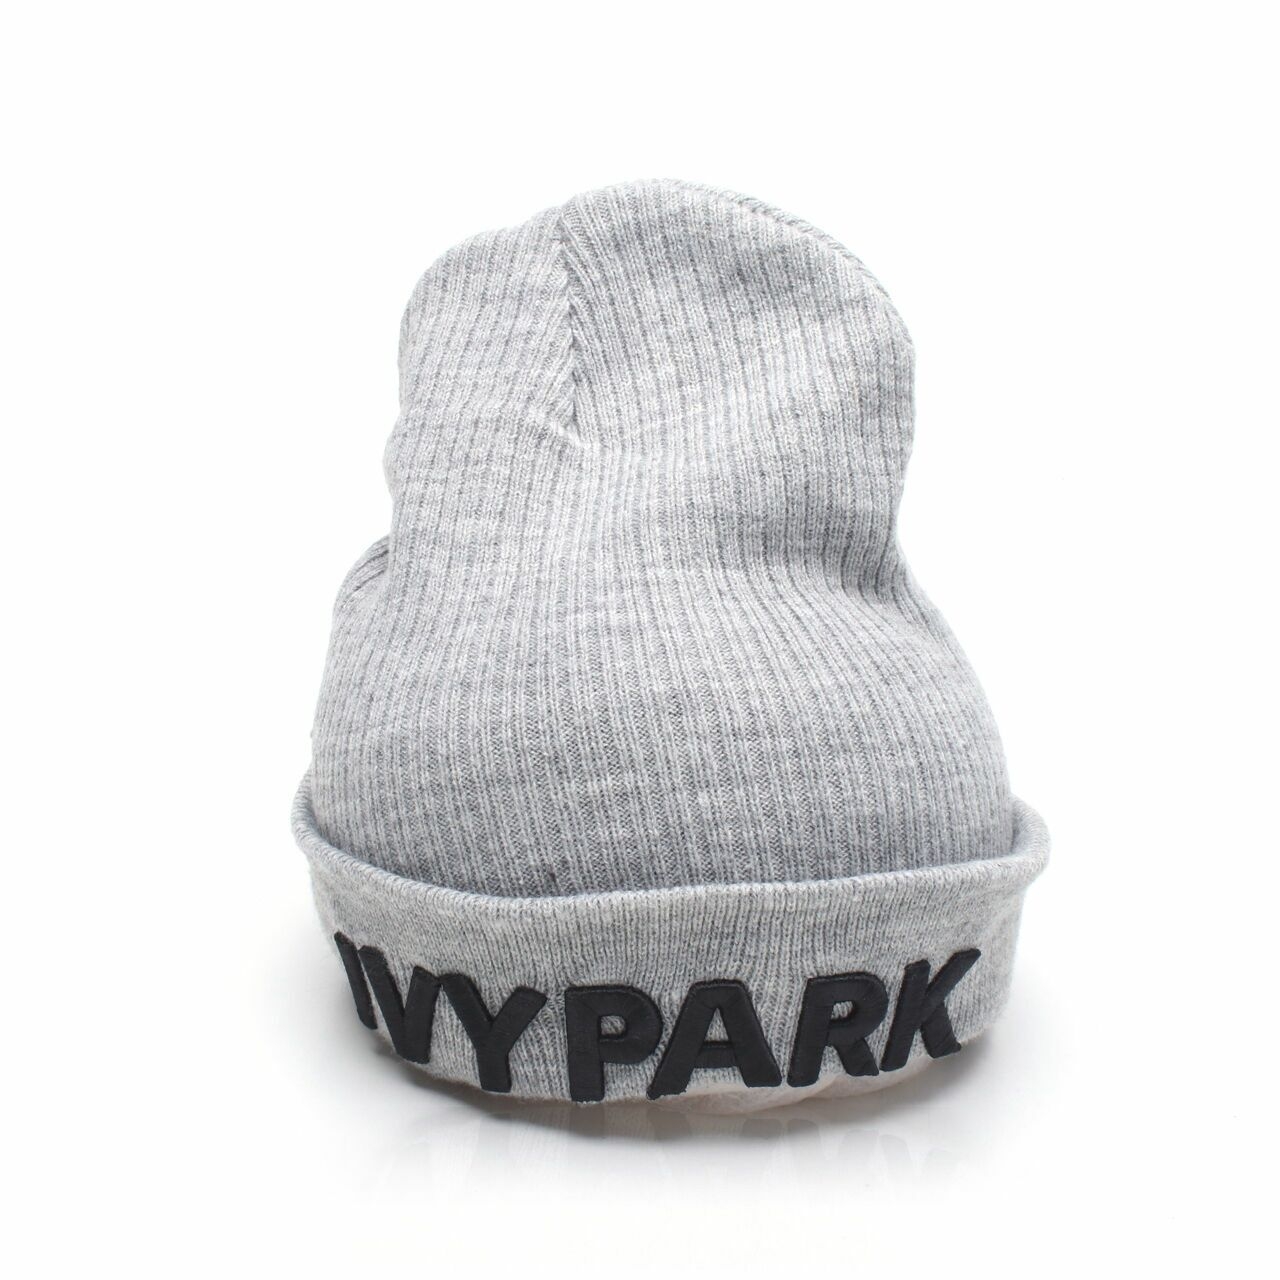 Ivy Park Grey Hats